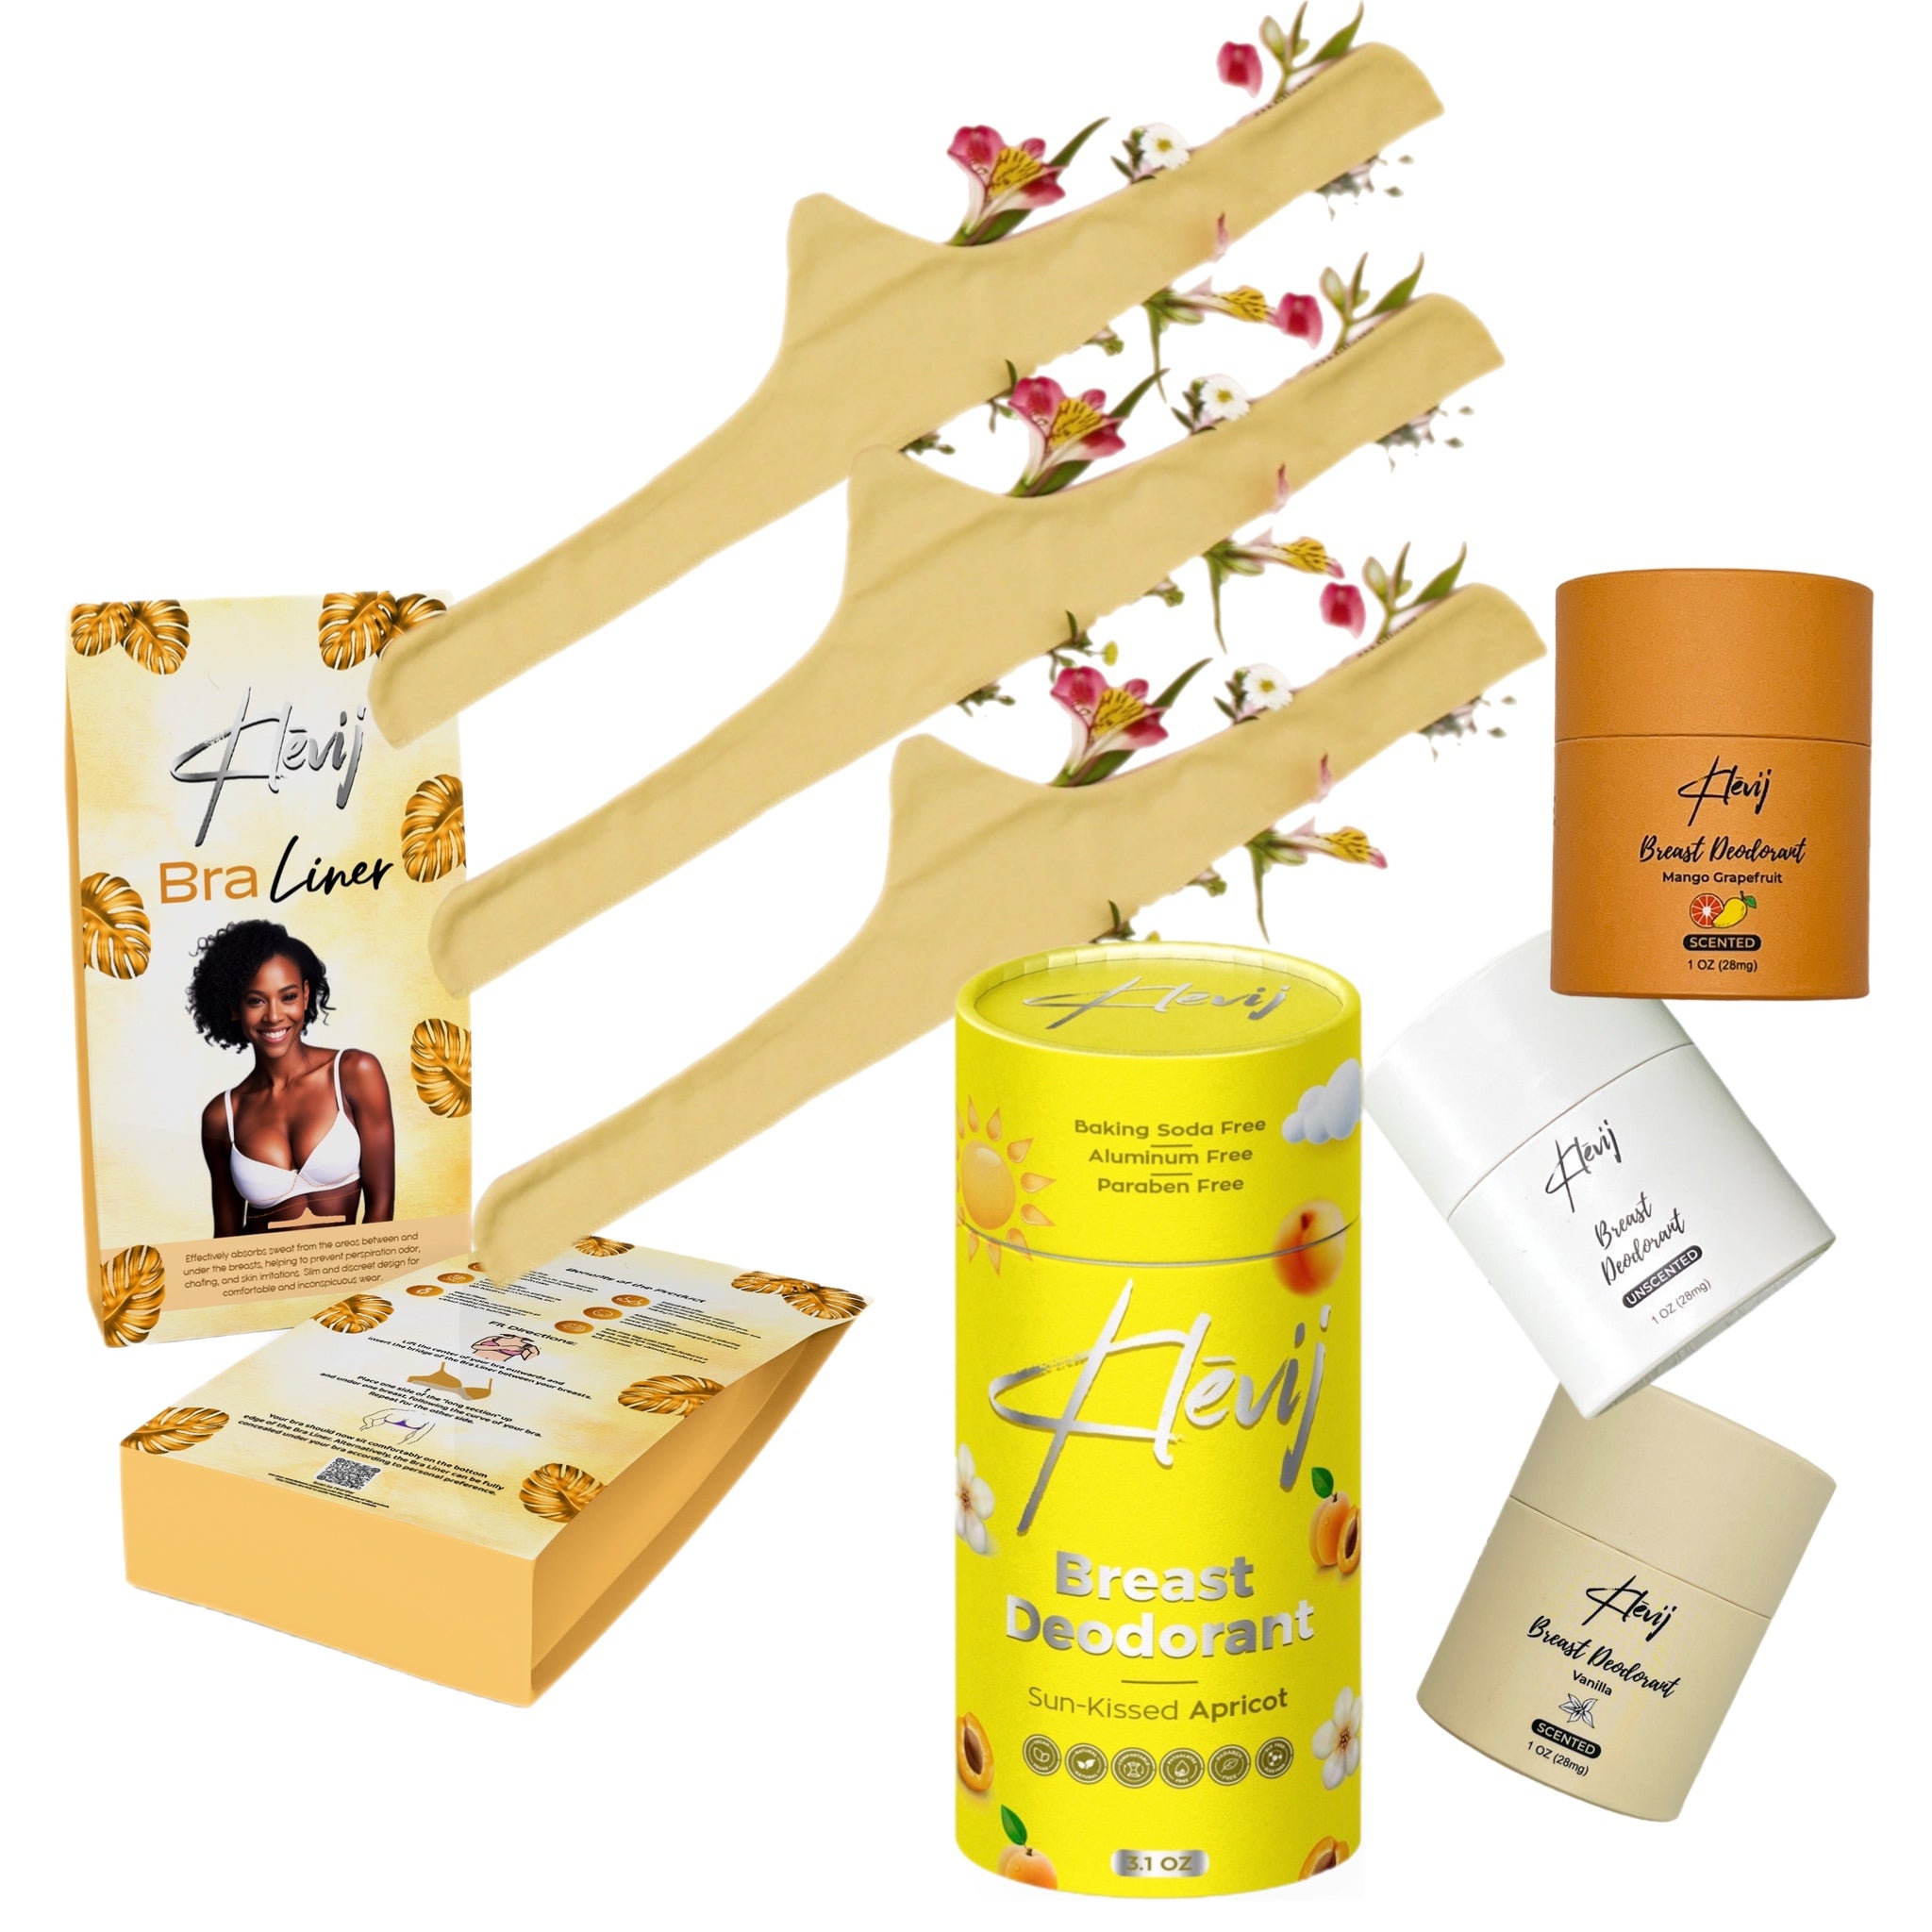 Klevij Sweat & Odor Control Essentials Breast Friends Gift Set: Luxurious Fragrances and Gentle Comfort